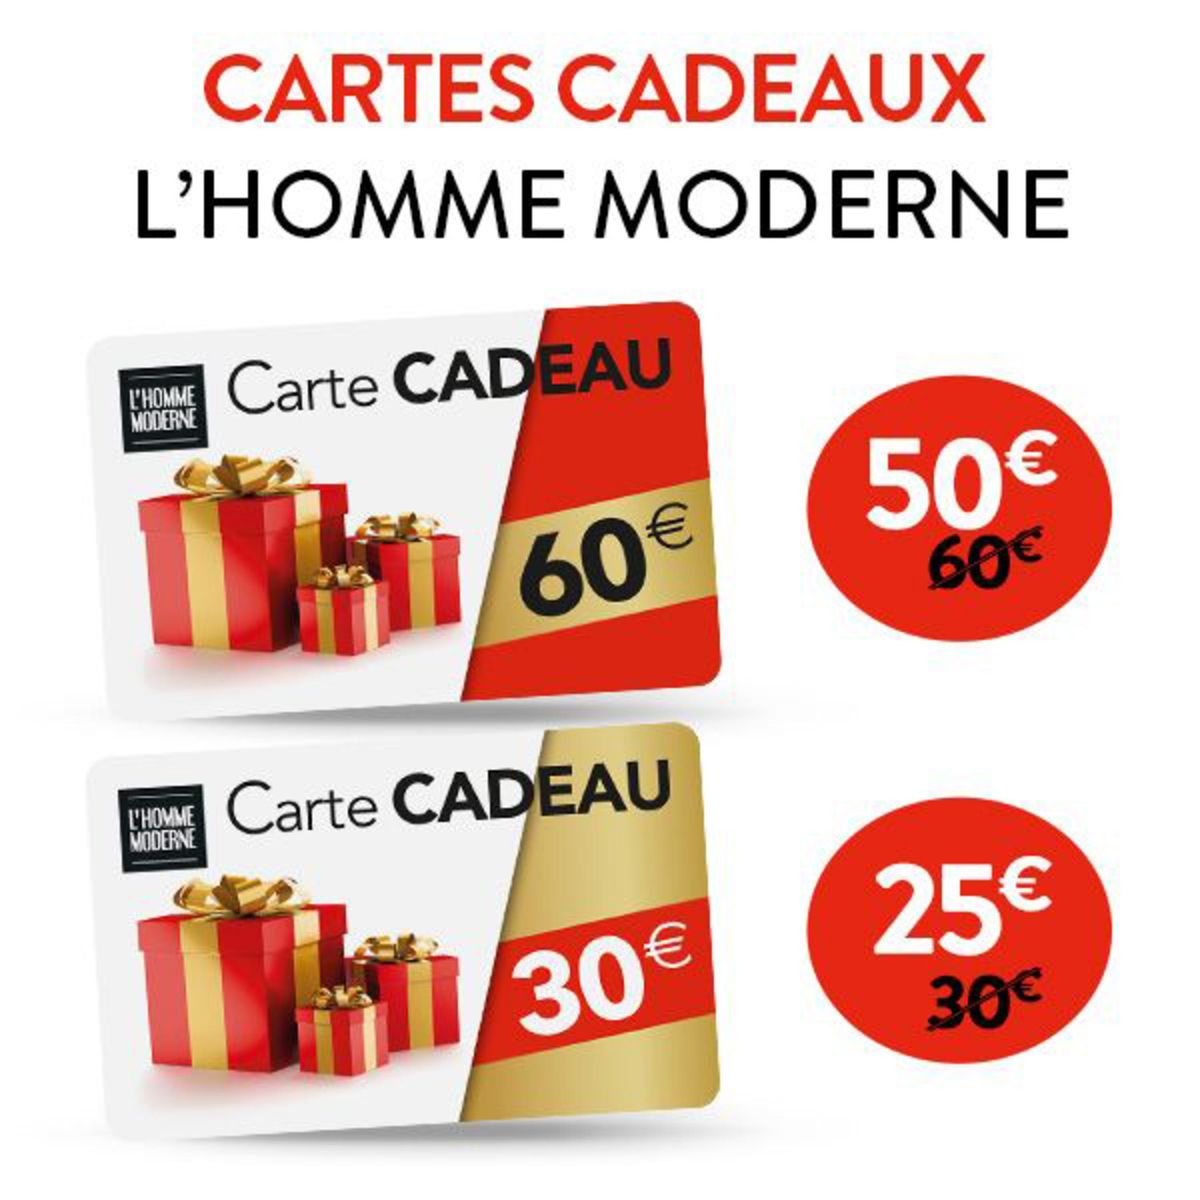 Catalogue Offres L'Homme Moderne, page 00001